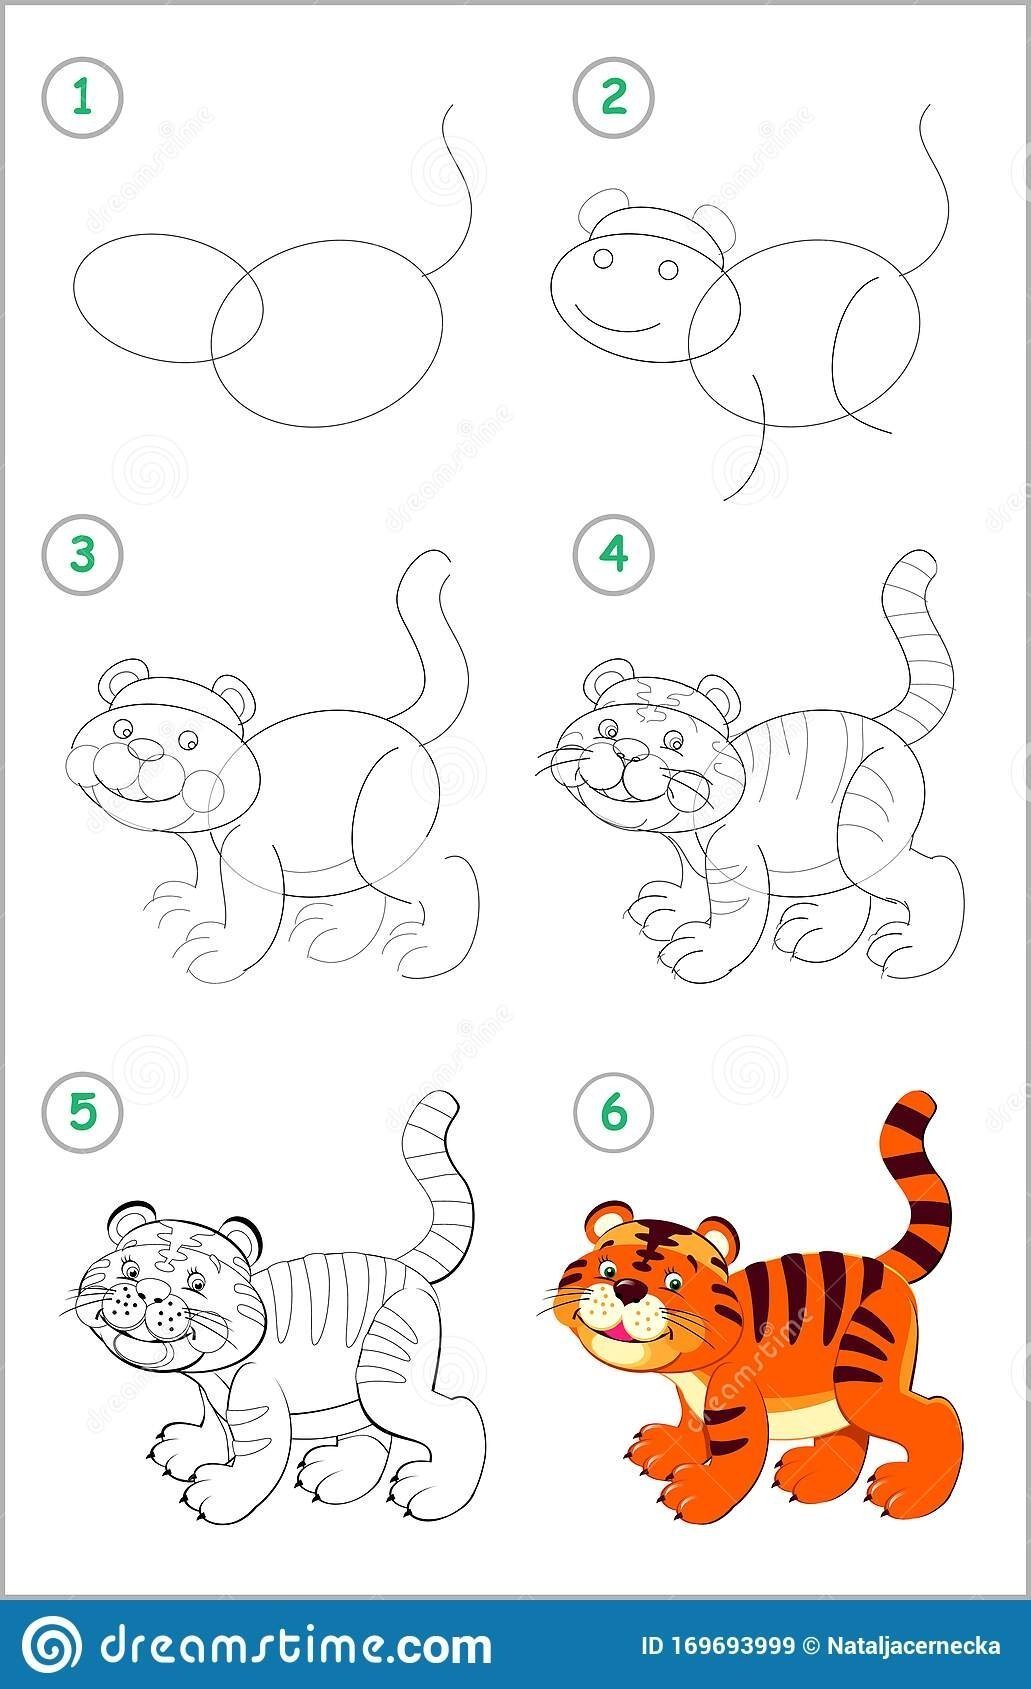 Поэтапное рисование тигра